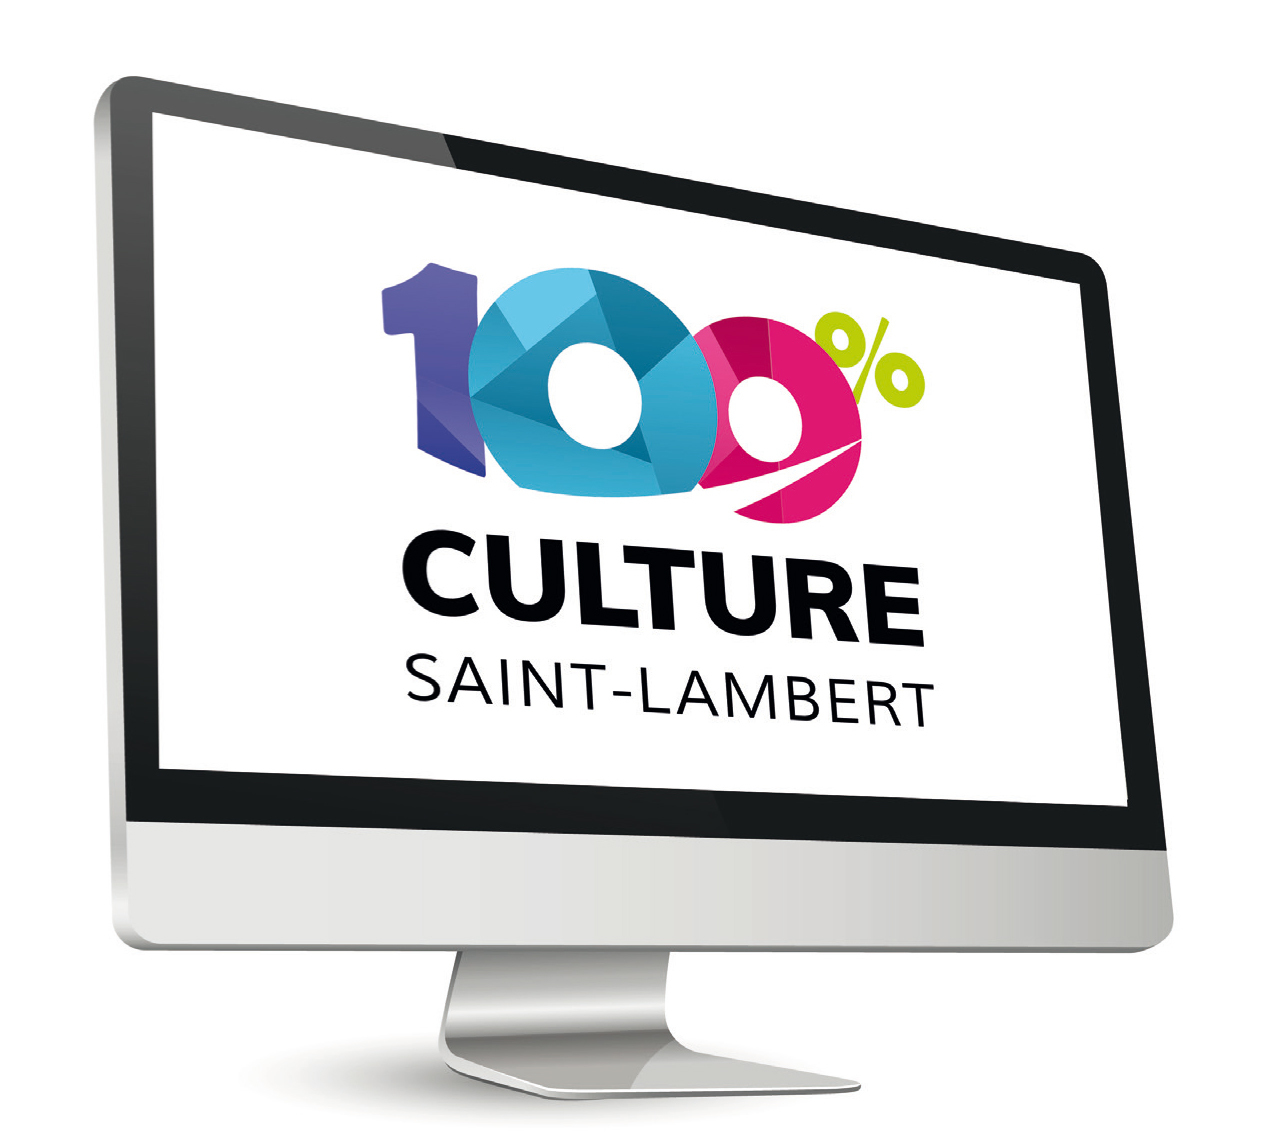 Launch of our new 100% CULTURE SAINT-LAMBERT microsite